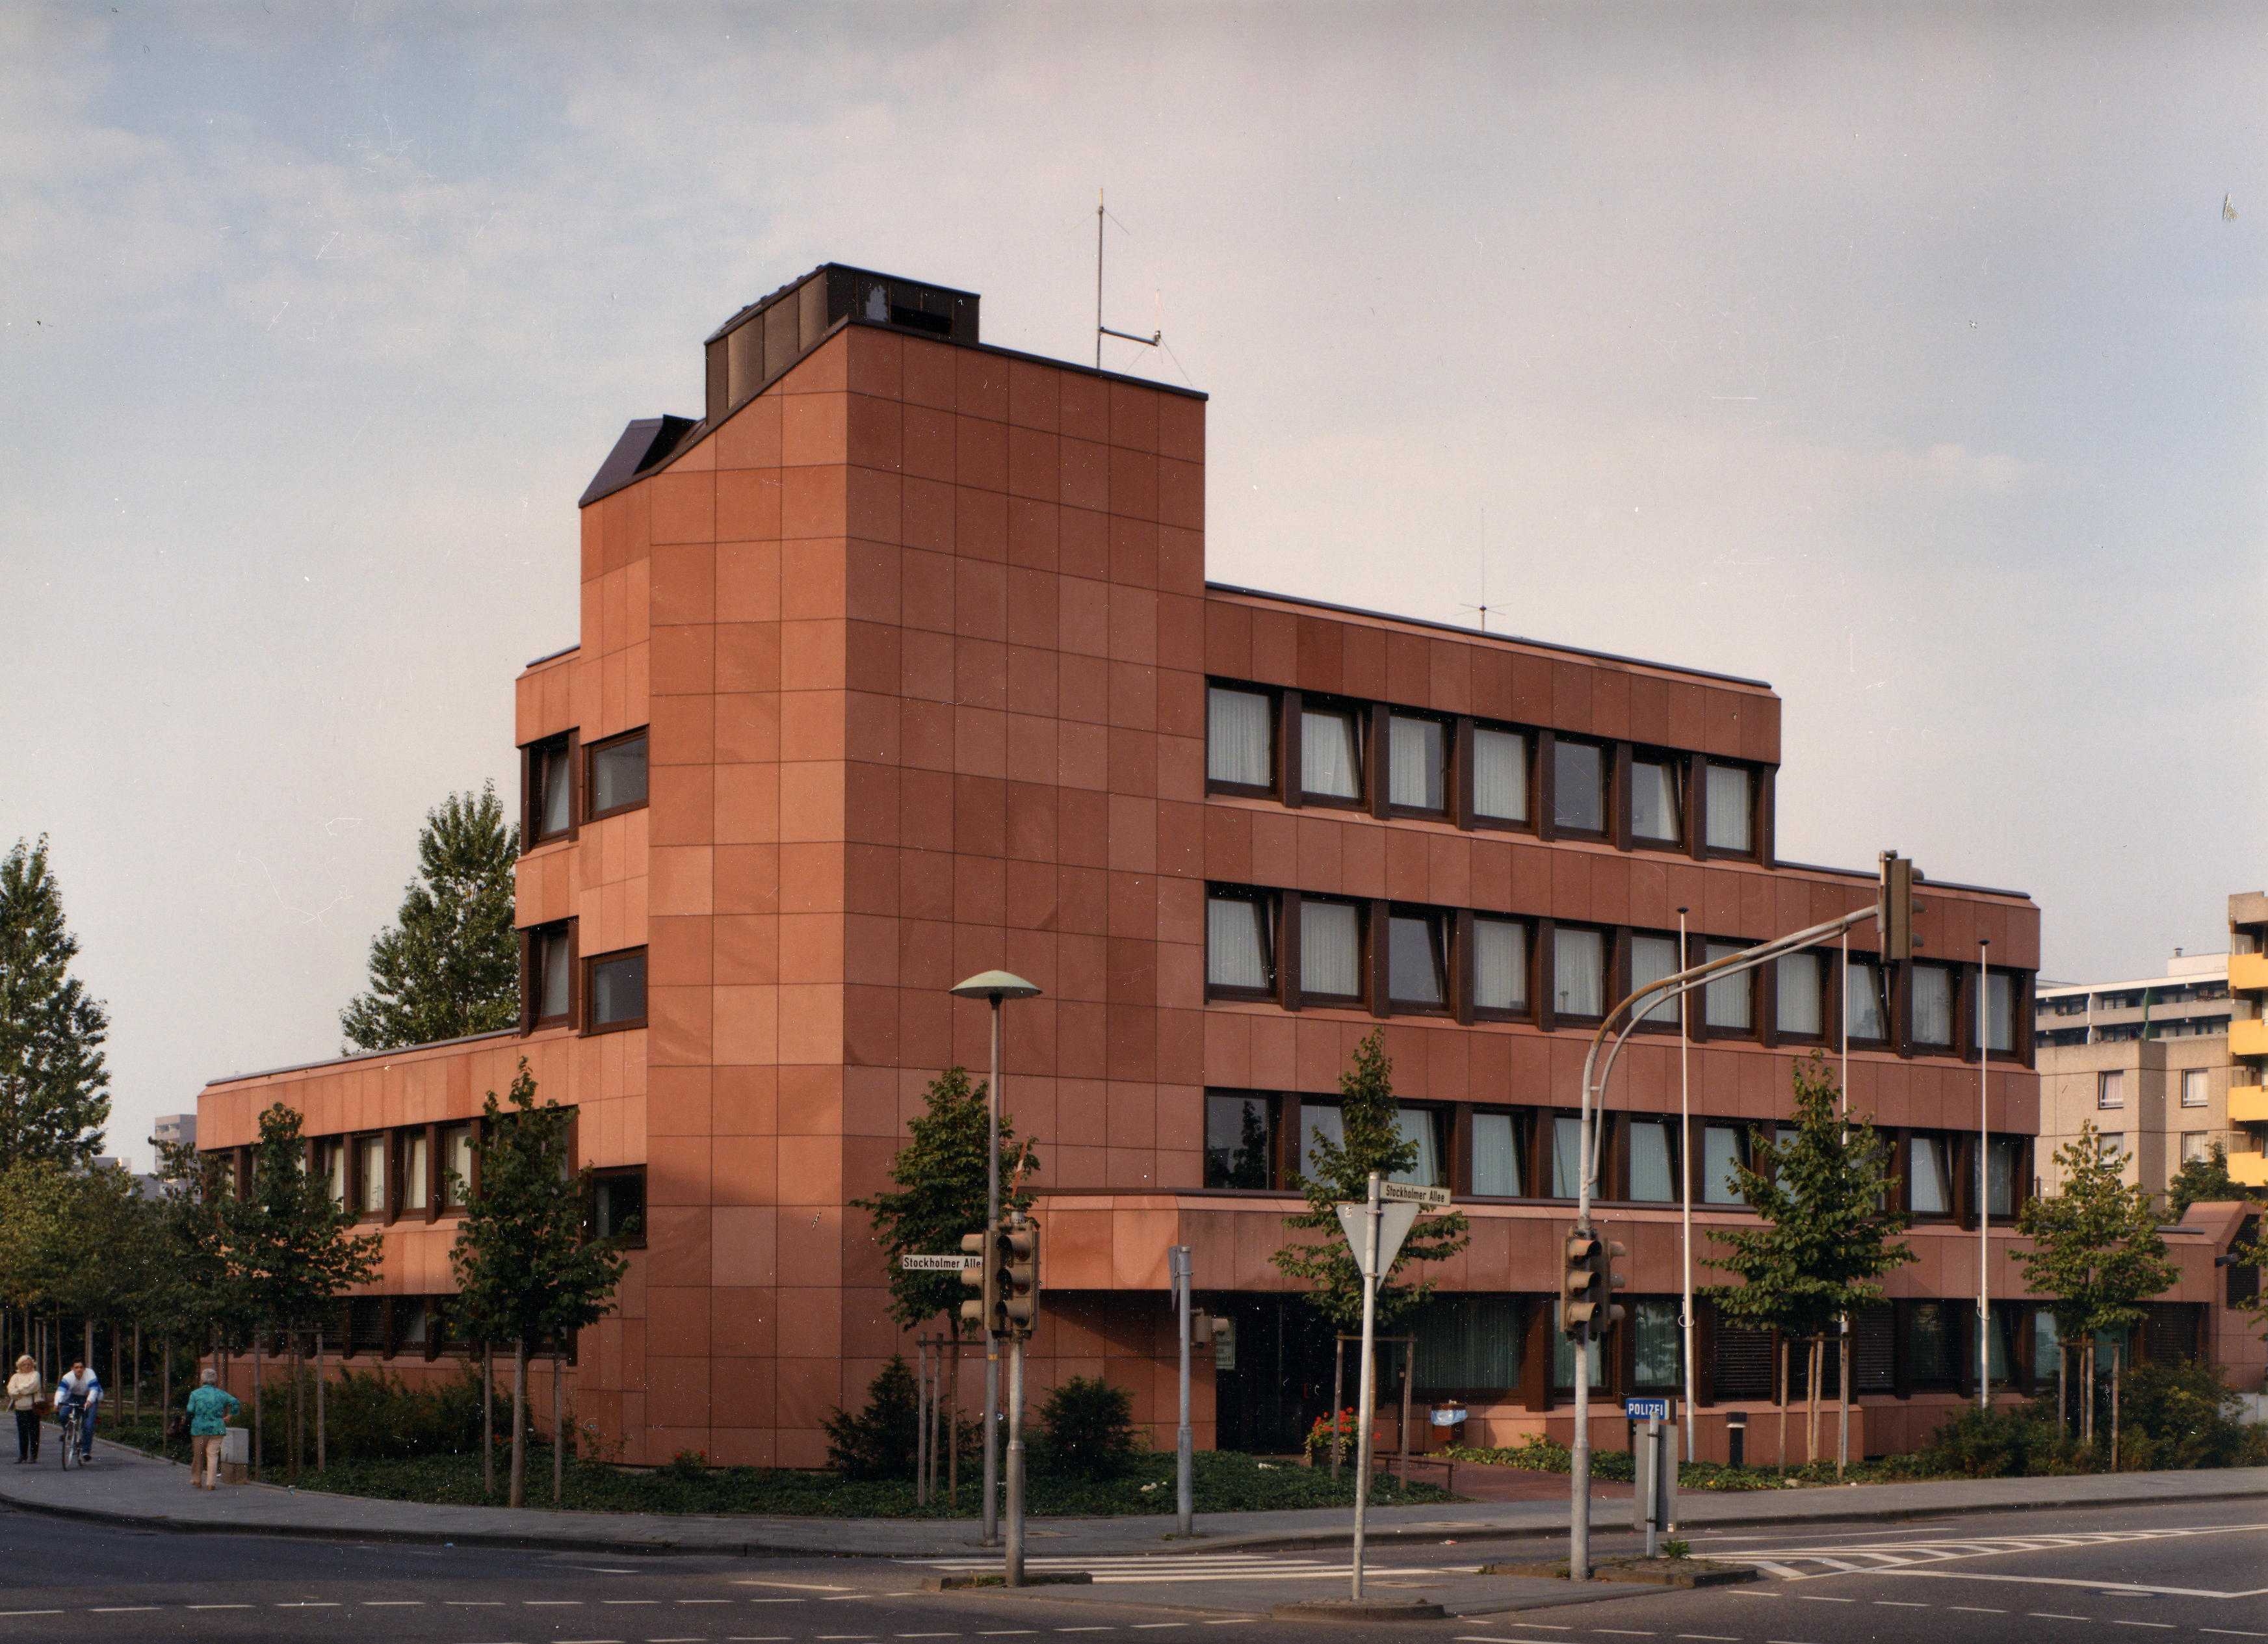 Chorweiler police station